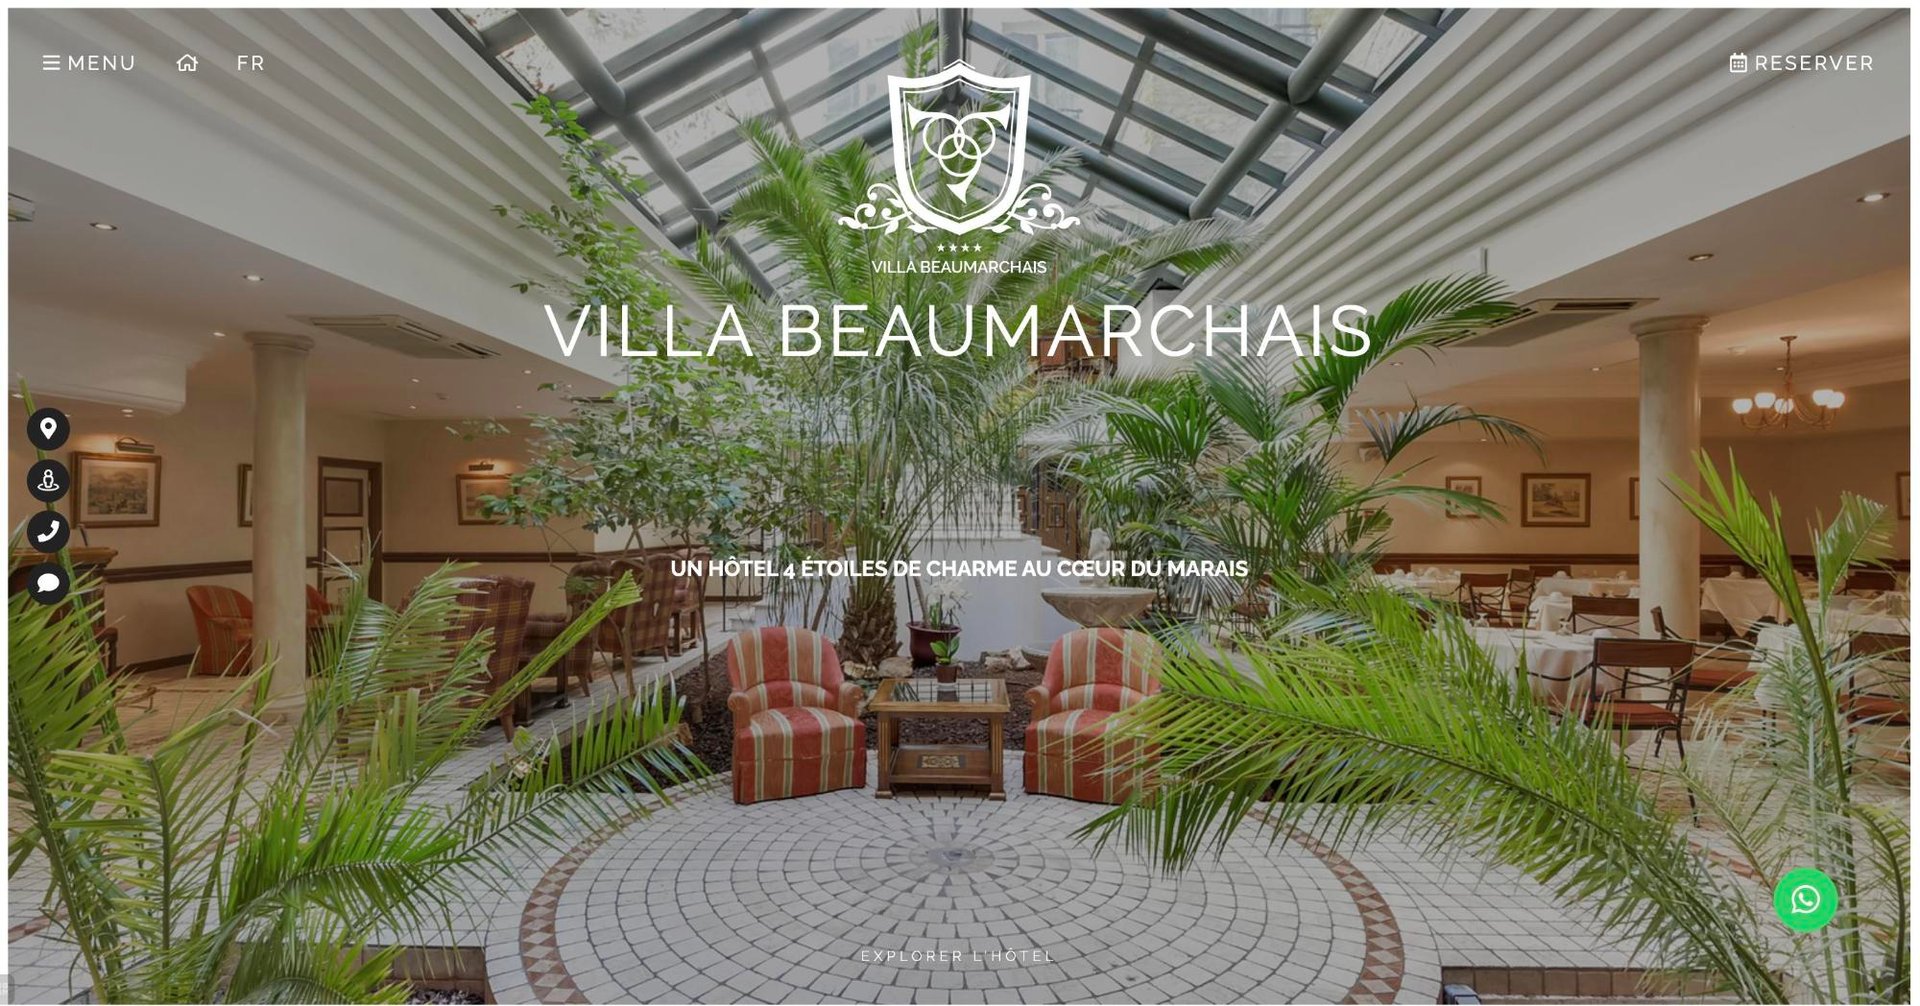 Agence MMCréation | Portfolio Villa Beaumarchais